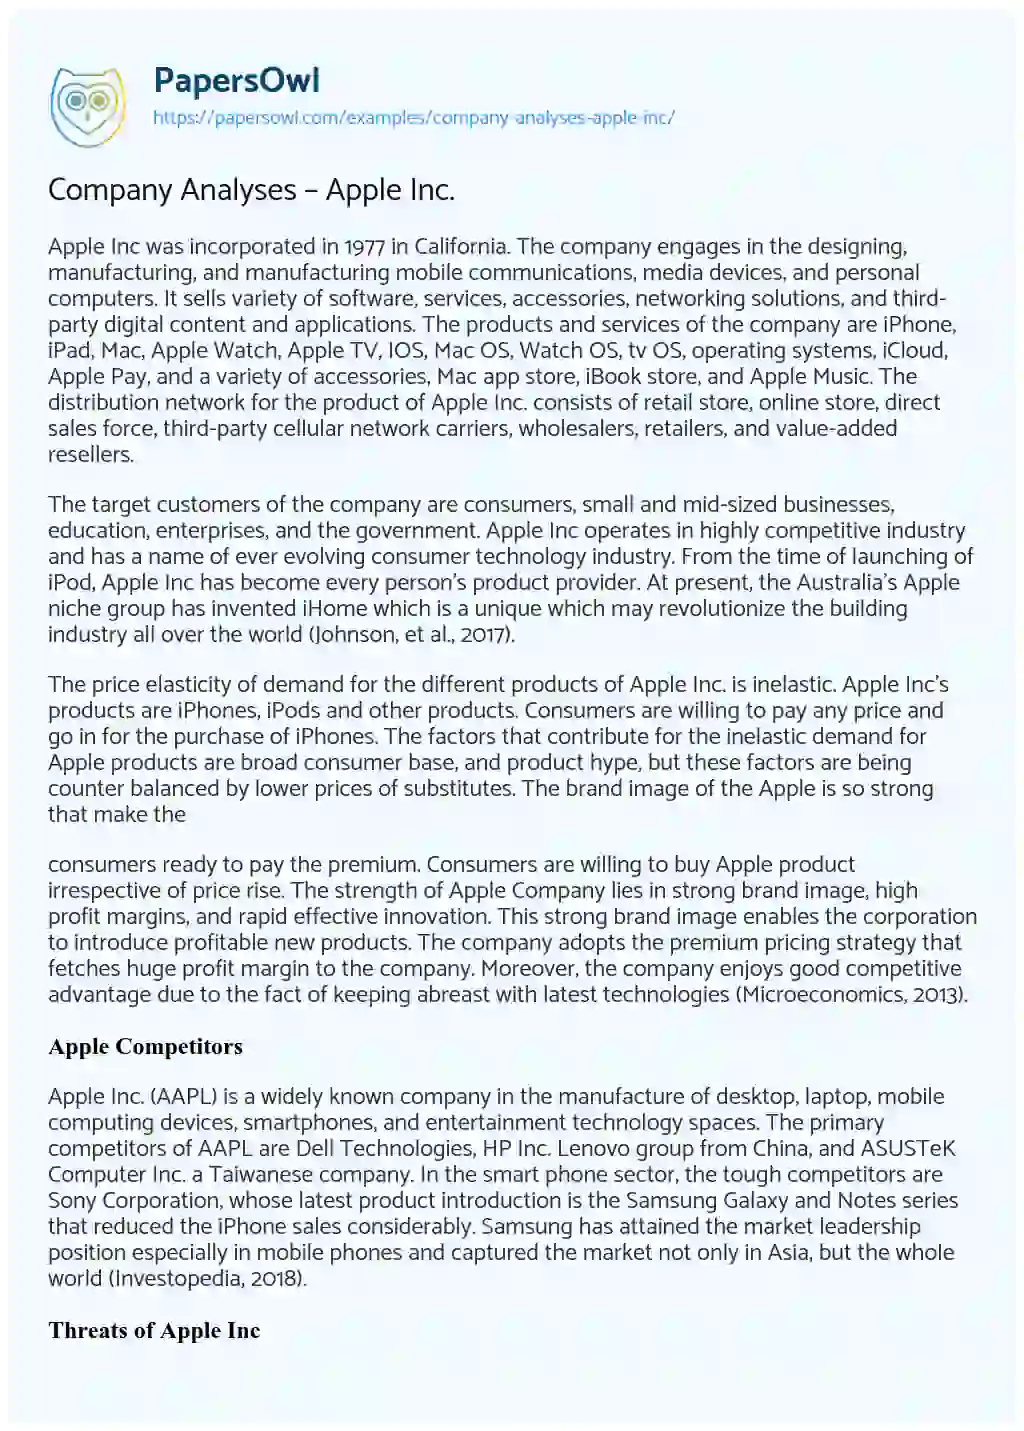 Essay on Company Analyses – Apple Inc.